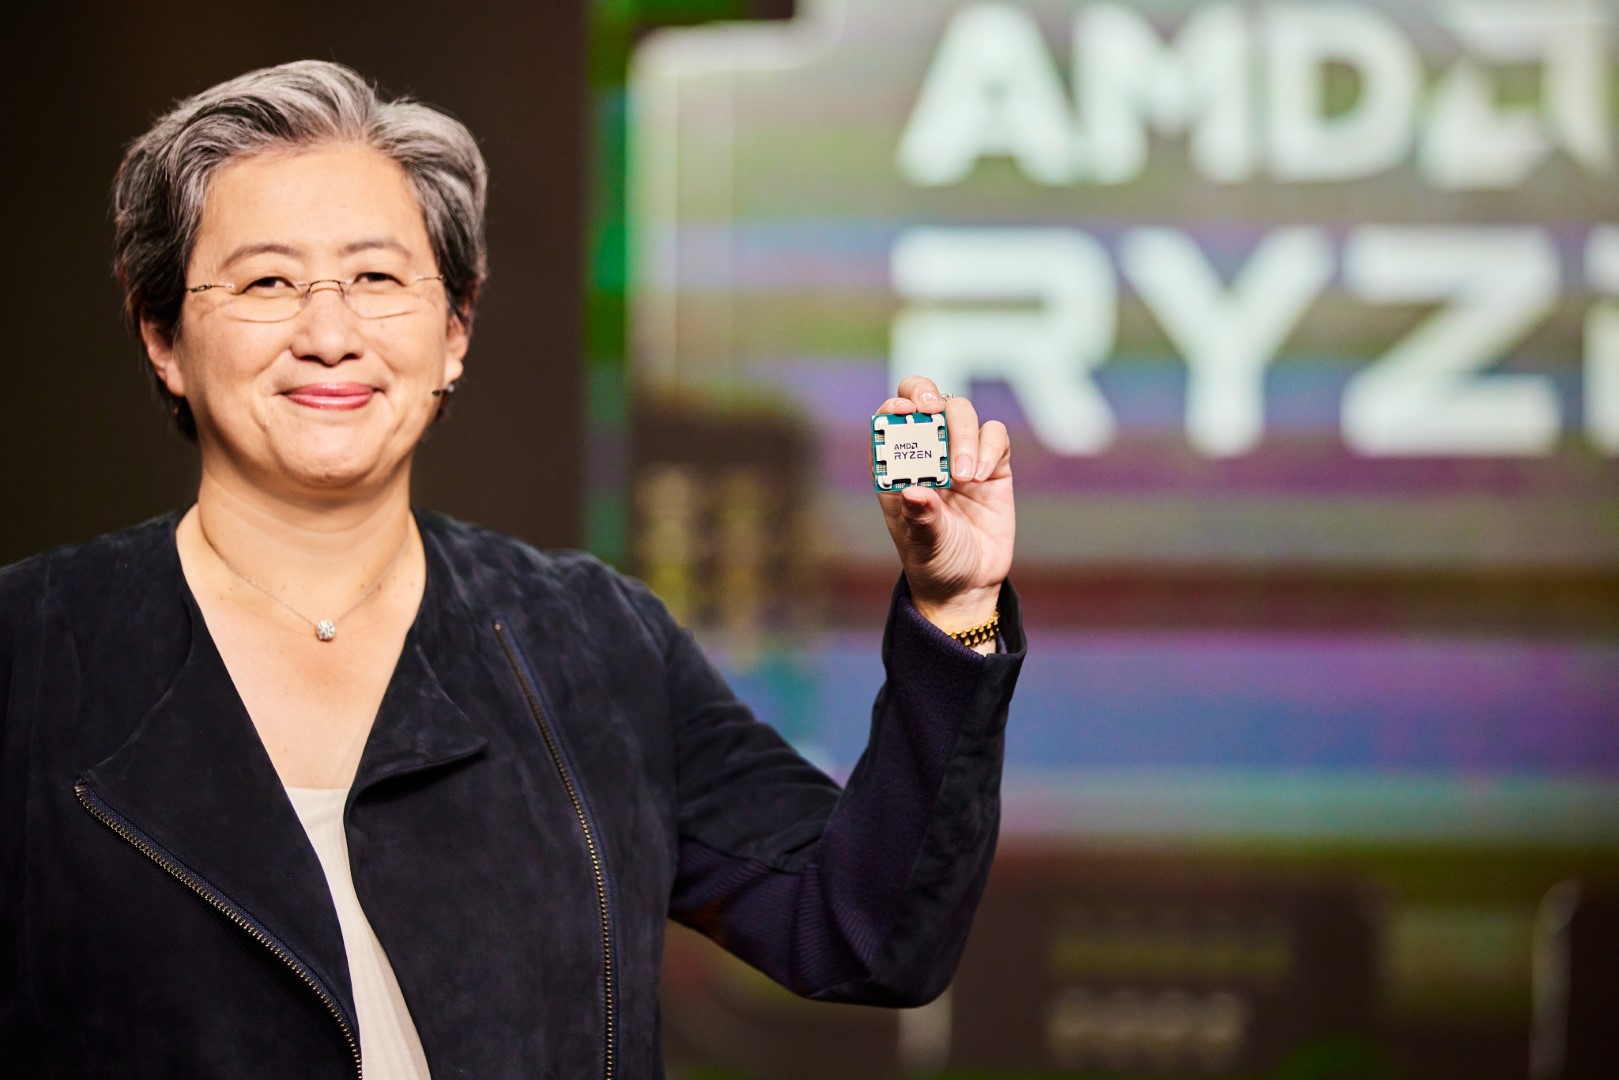 AMD Ryzen 7 5800X 3D 